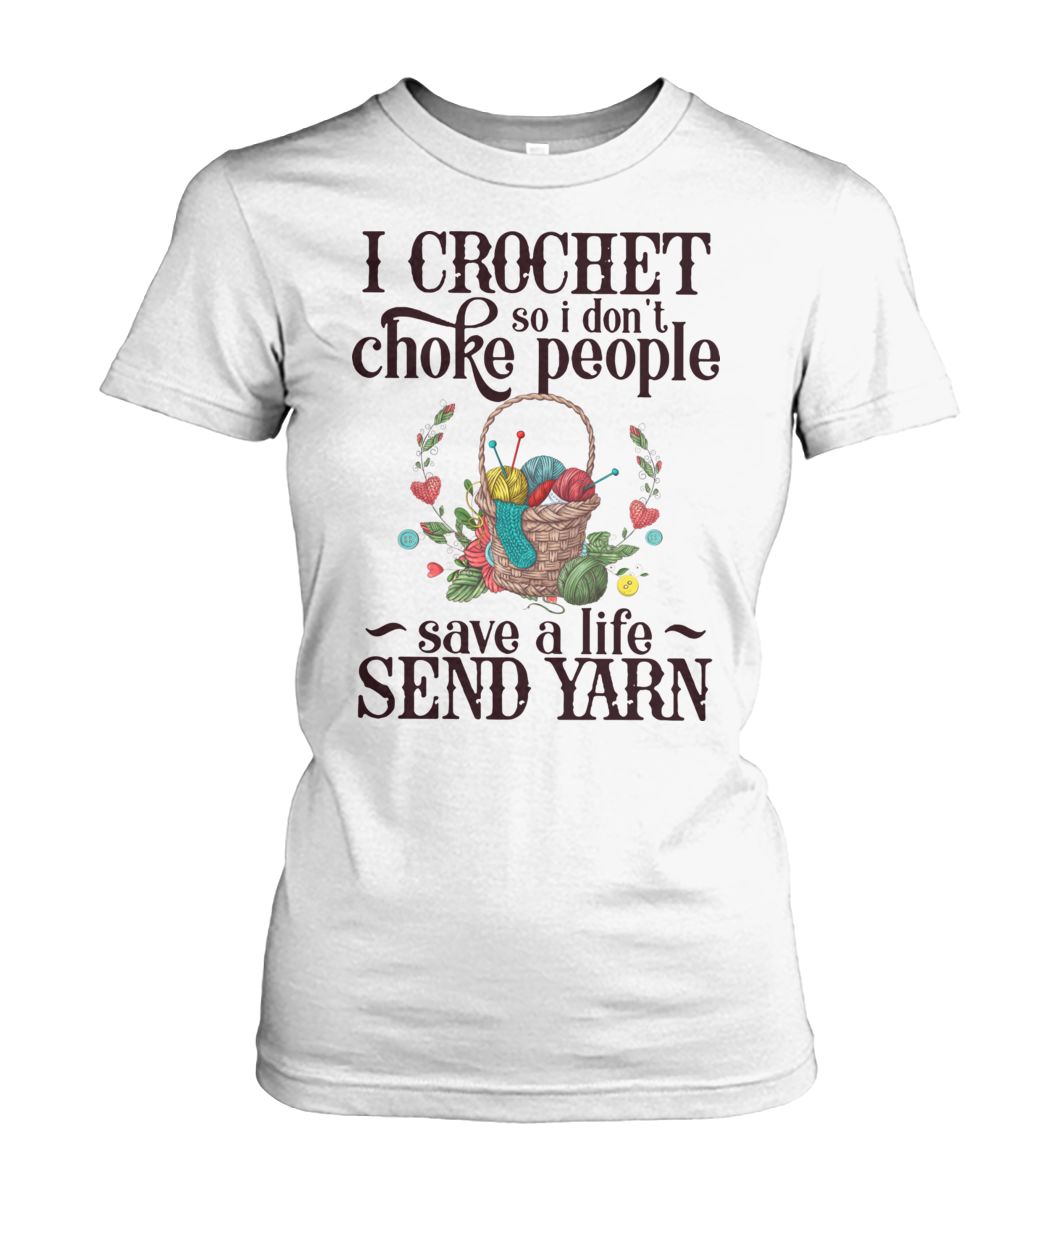 I crochet so I don't choke people save a life send yarn women's crew tee